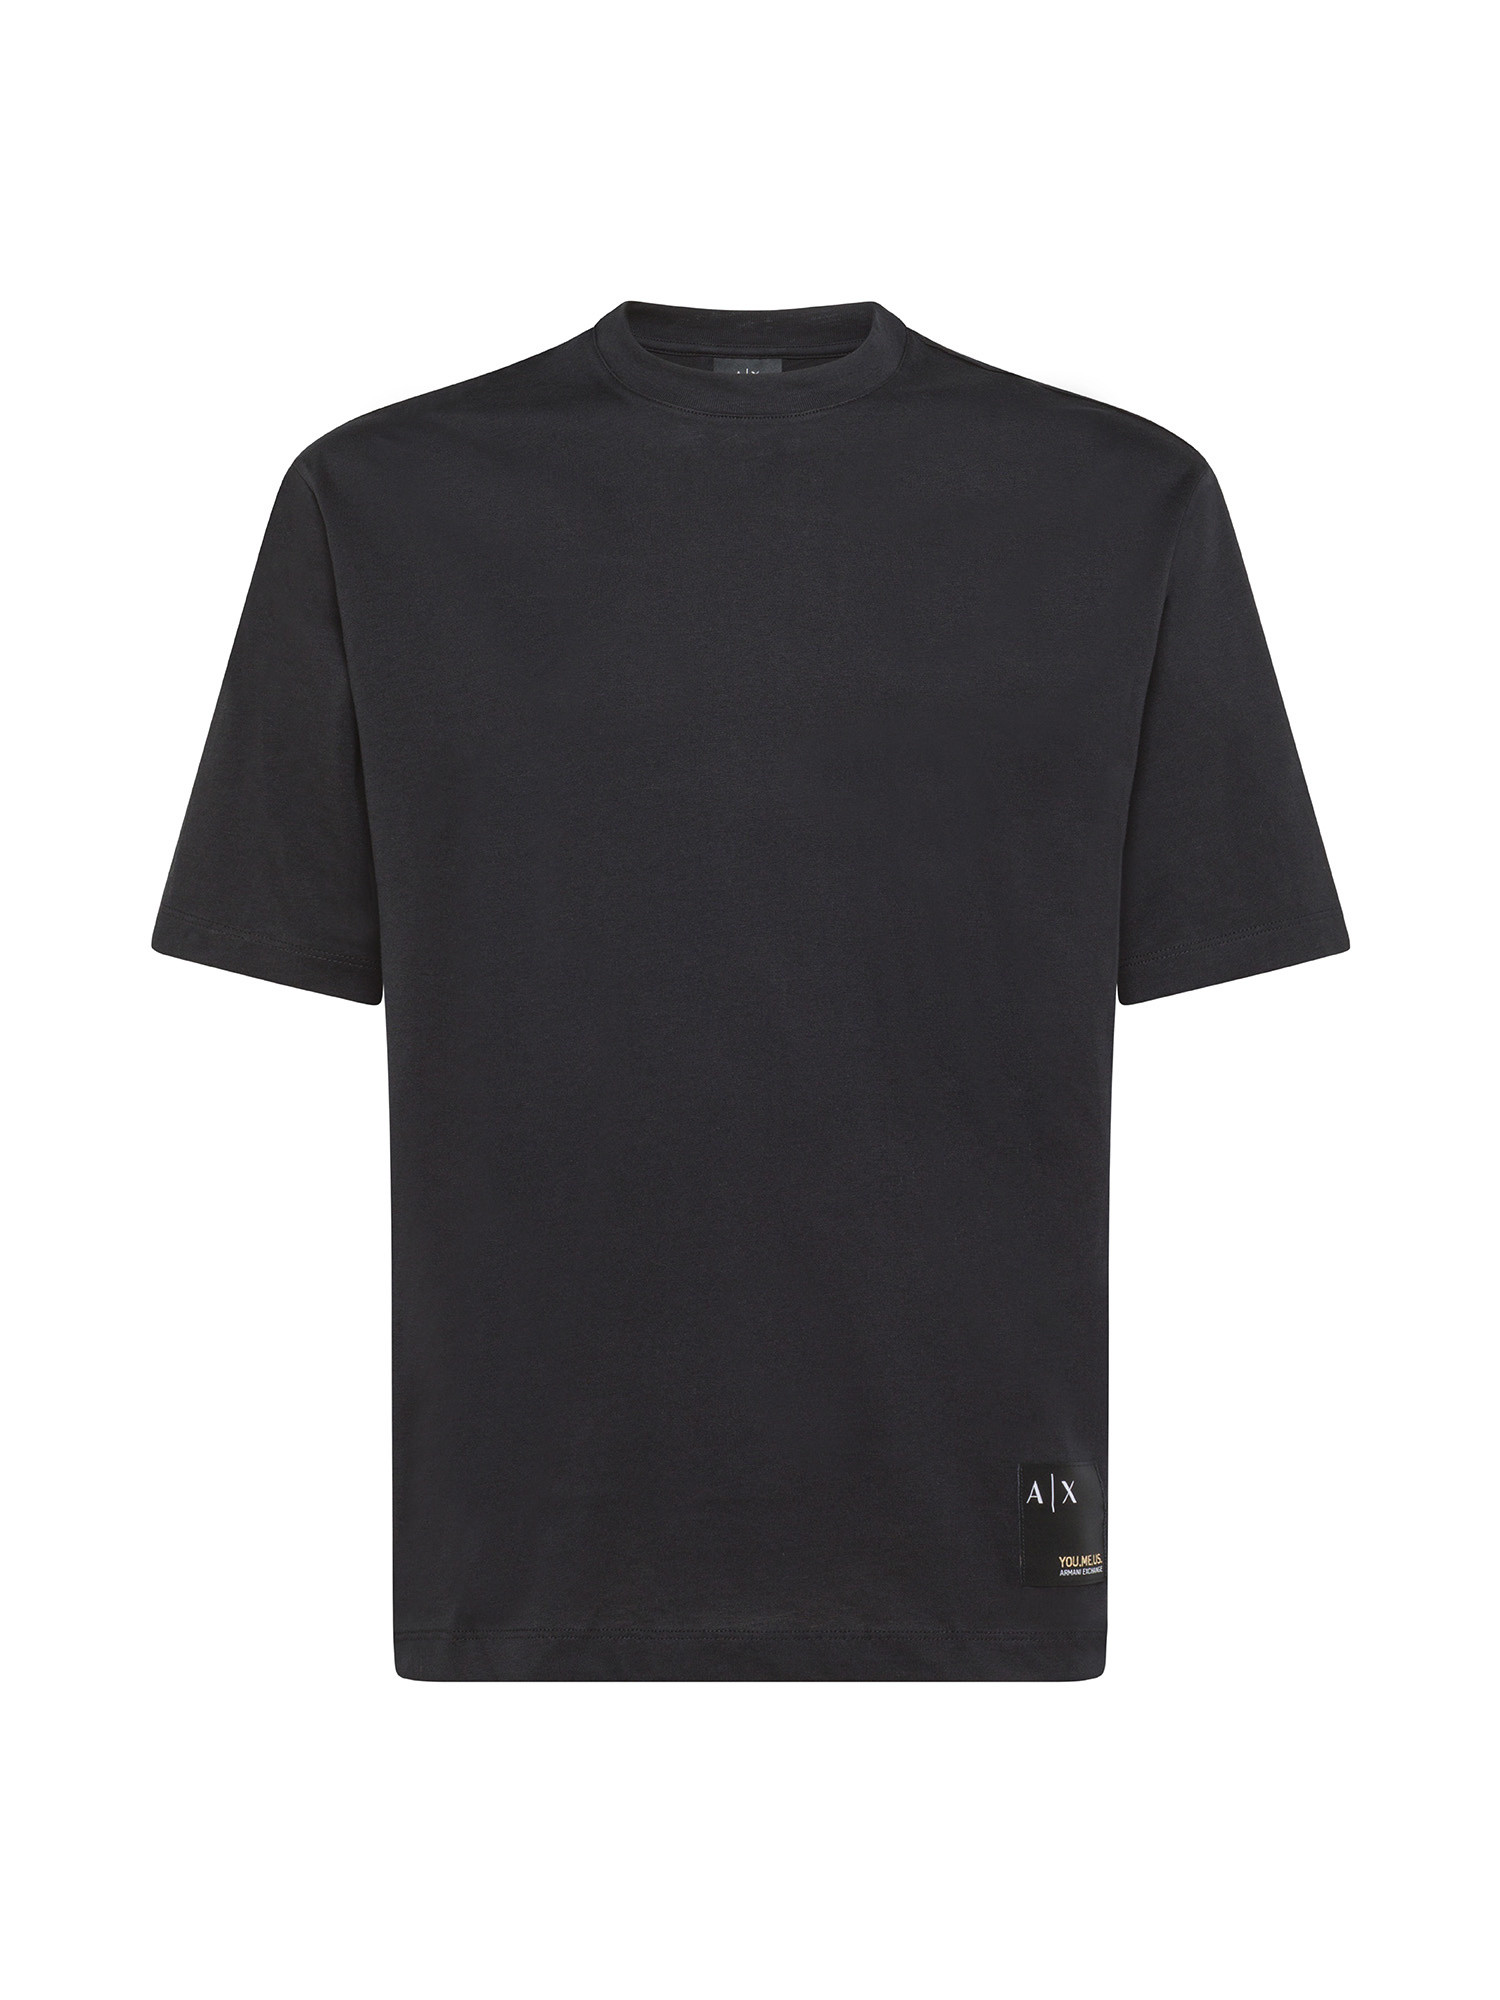 Armani Exchange - T-shirt girocollo in cotone, Nero, large image number 0